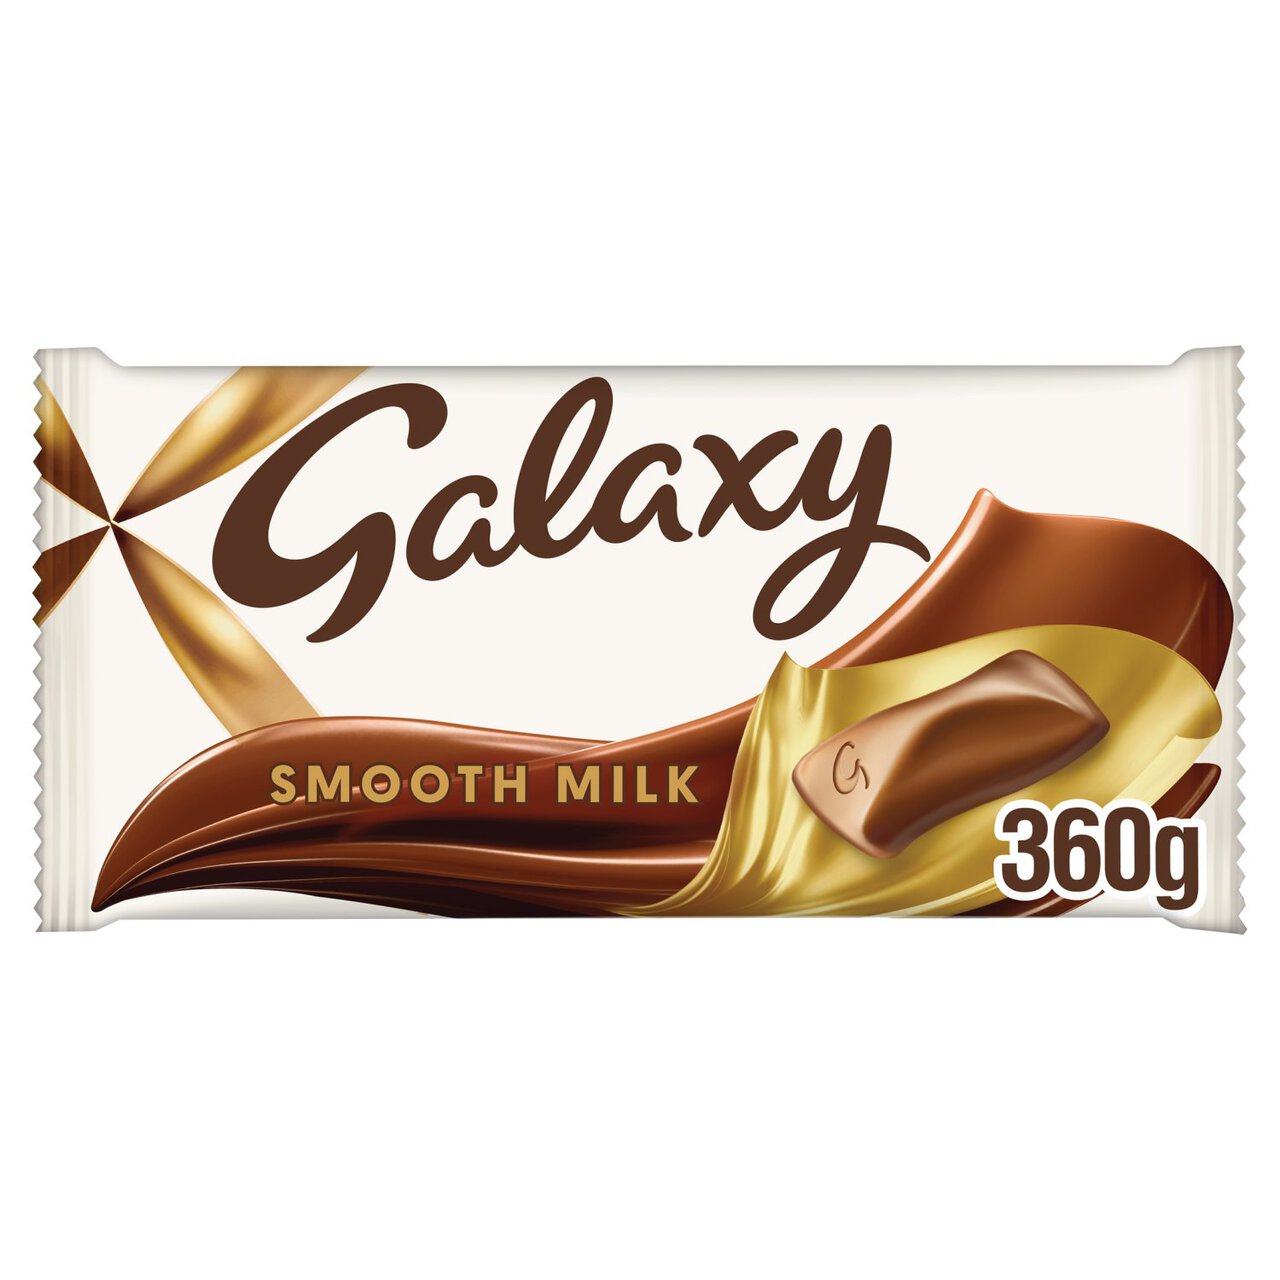 Galaxy Smooth Milk Chocolate Sharing Block Bar 360g